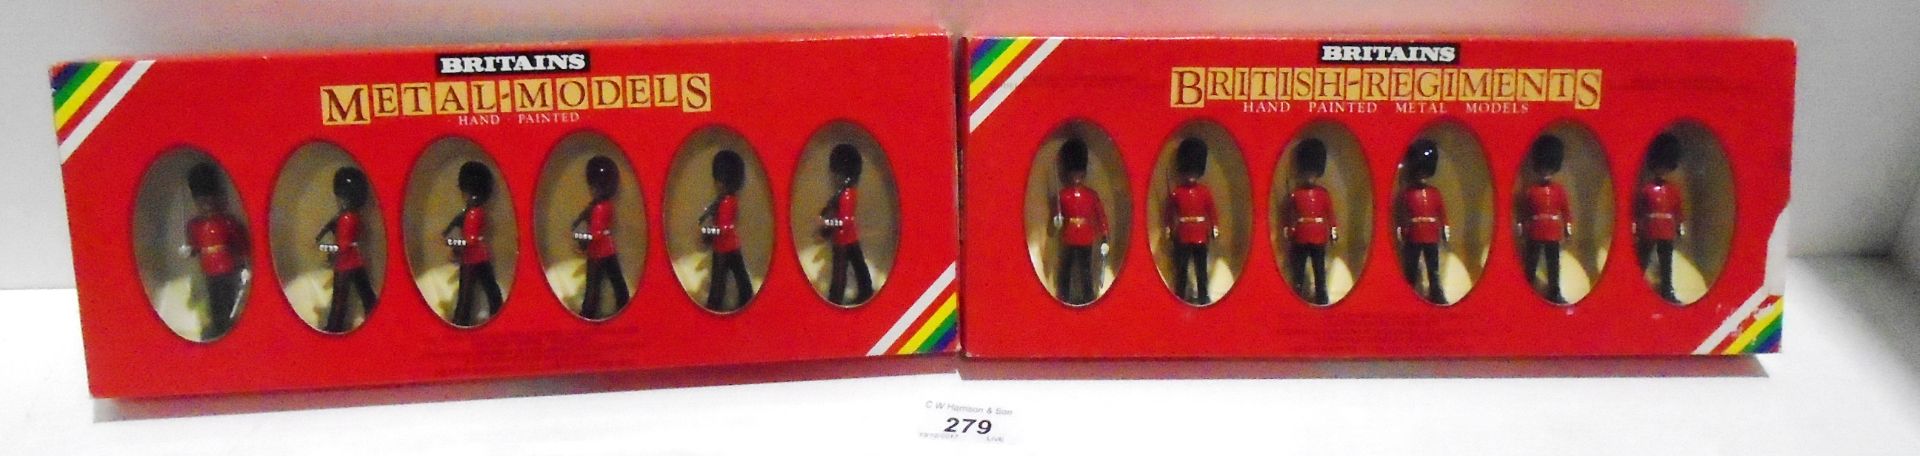 2 Britains British Regiments model boxed sets - The Scots Guards No.